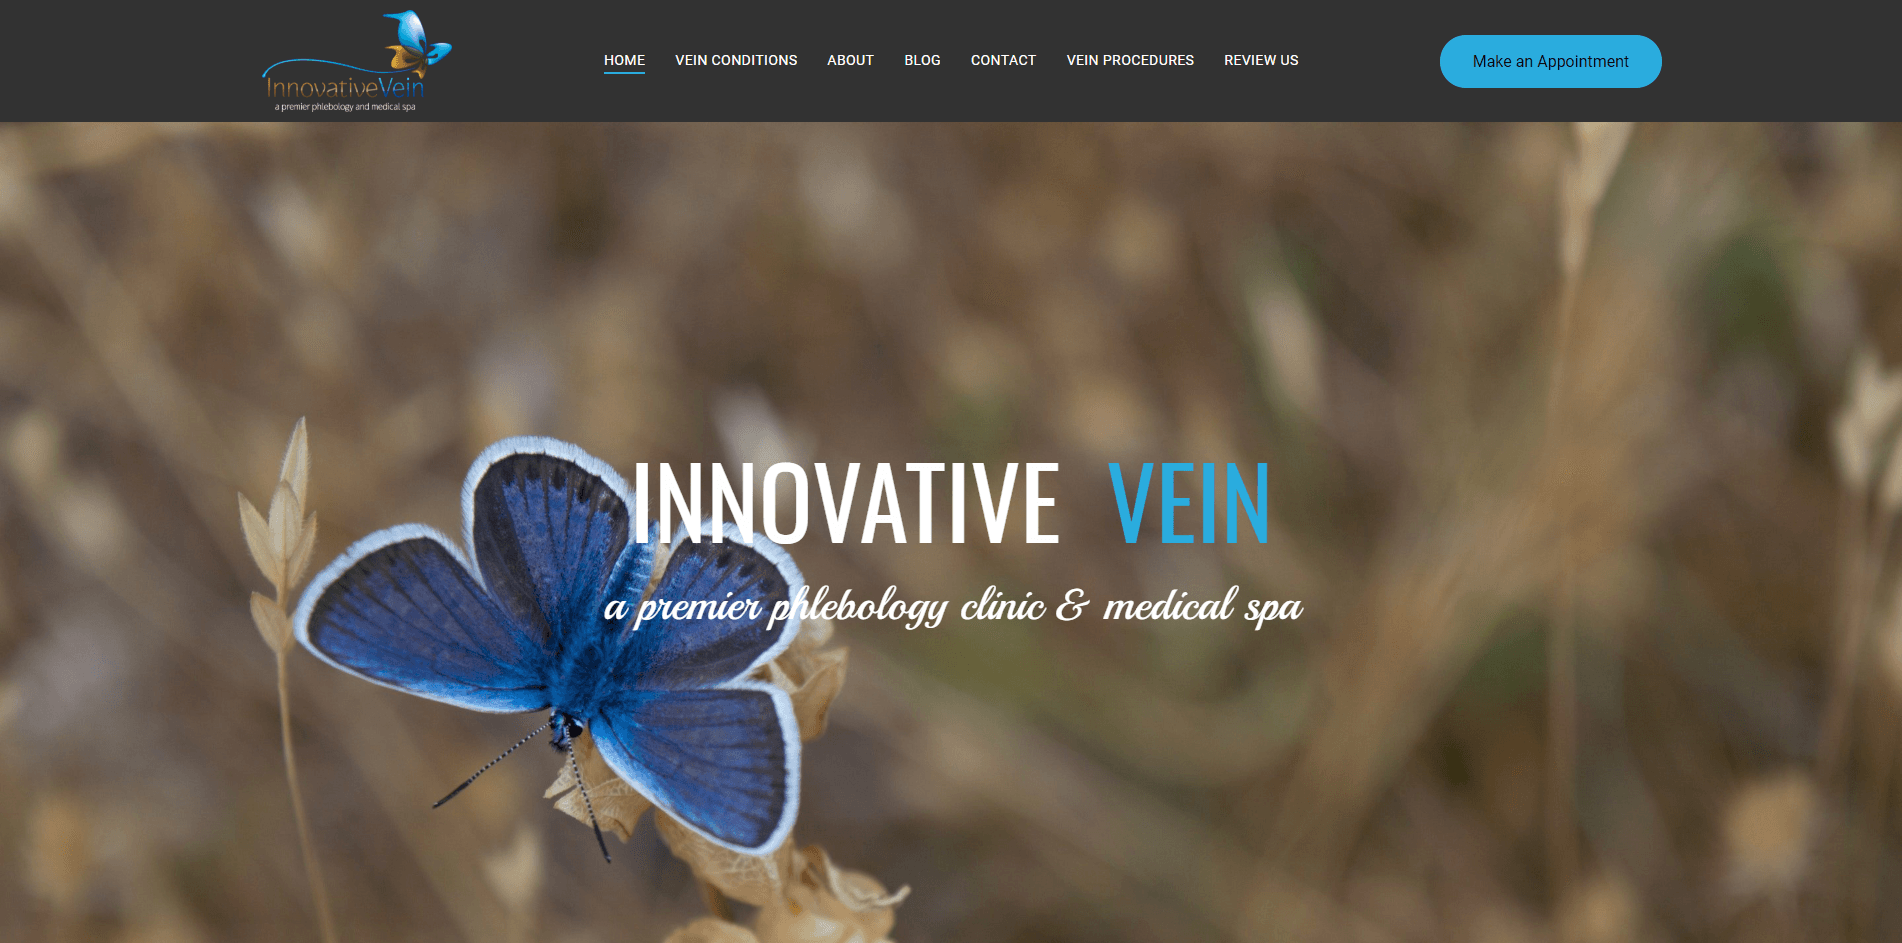 Innovative Vein Website Link